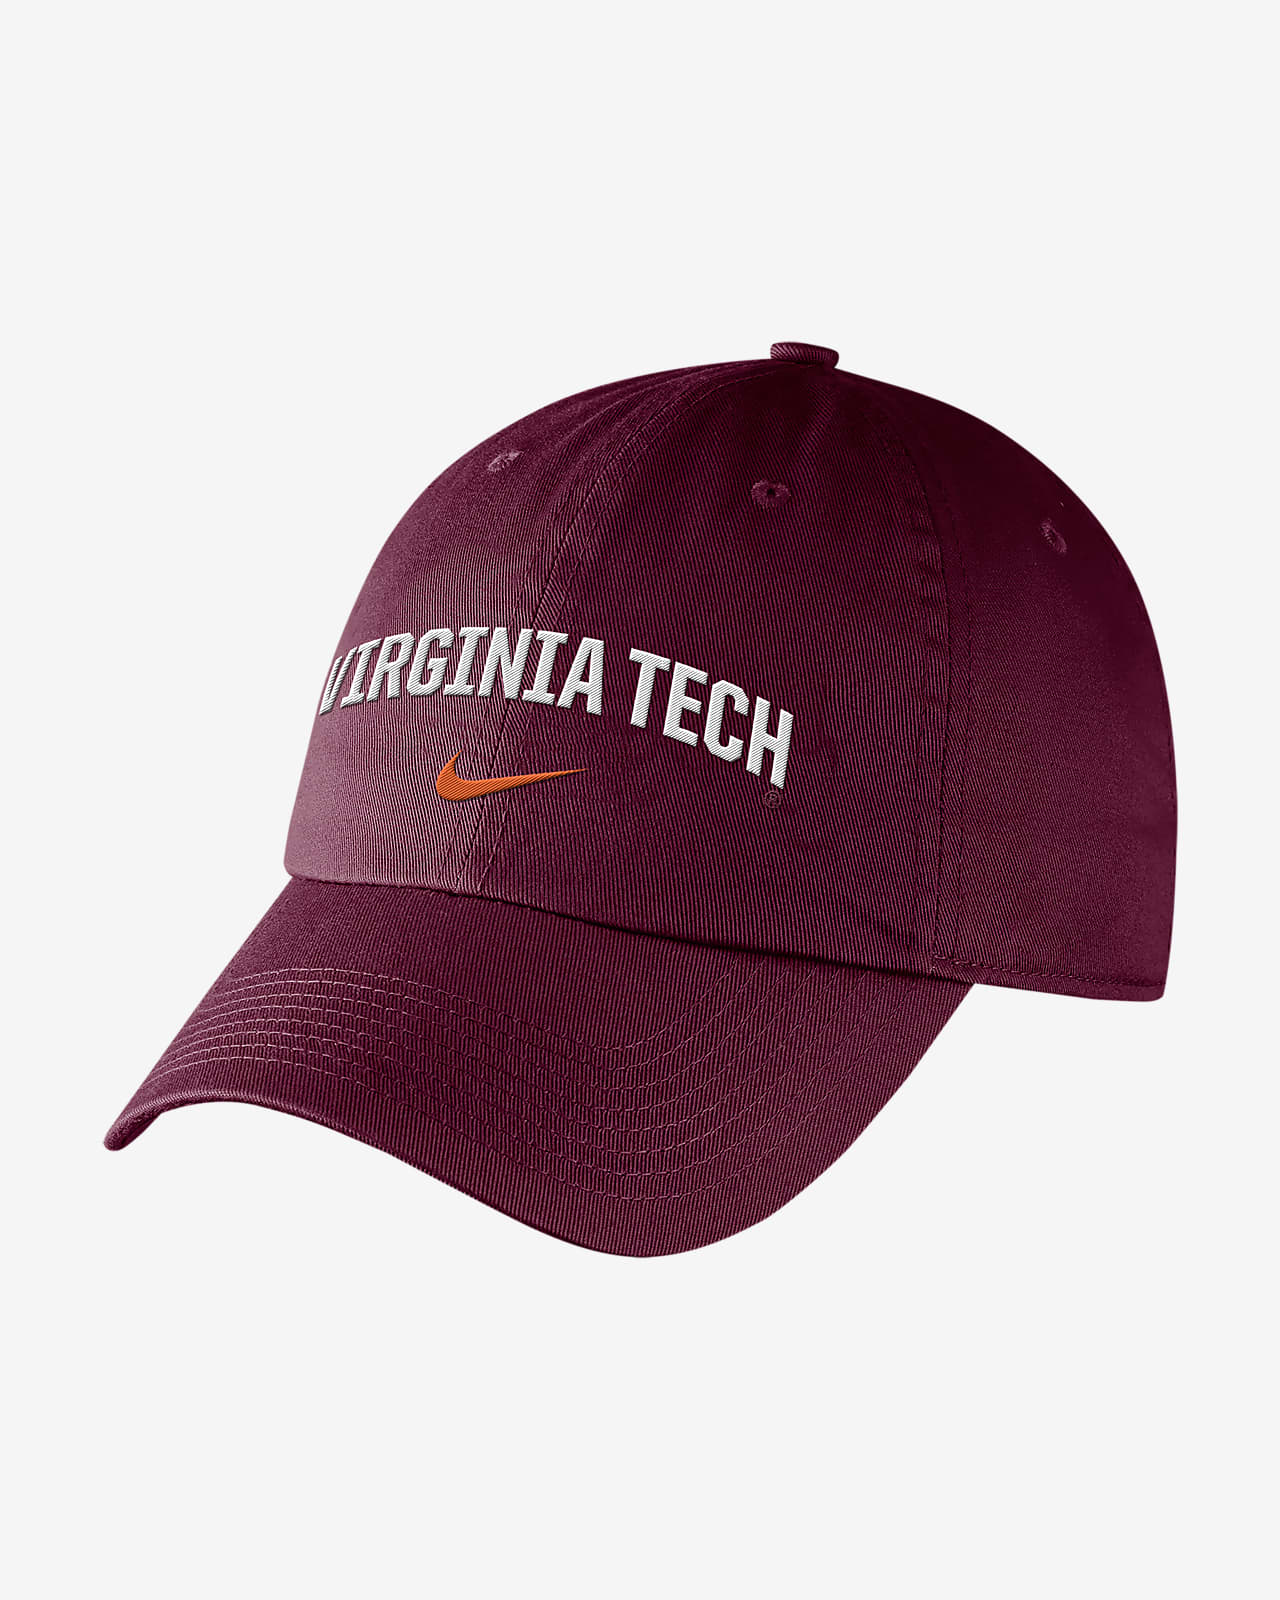 Nike College (Virginia Tech) Hat